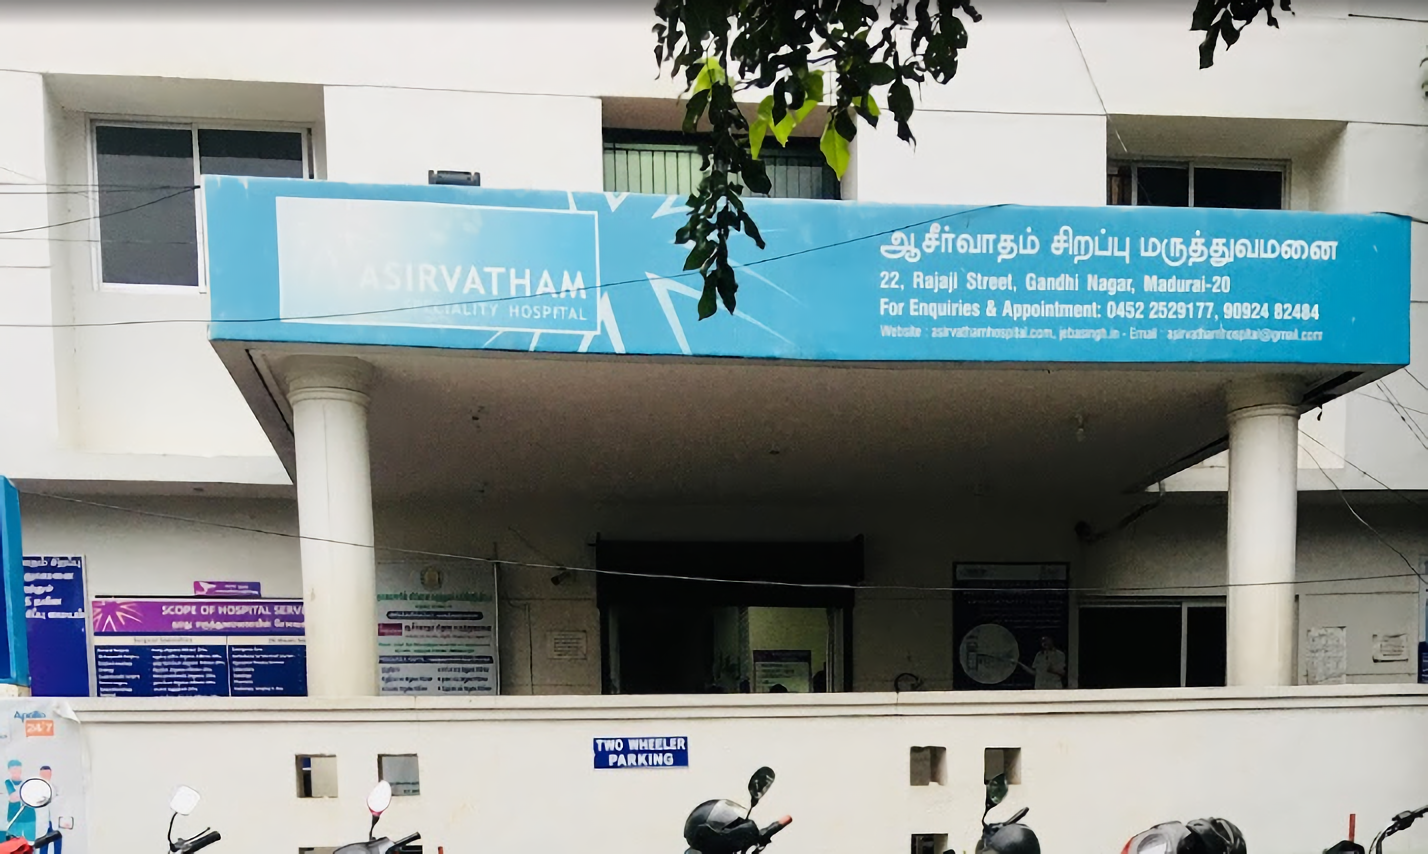 Asirvatham Speciality Hospital